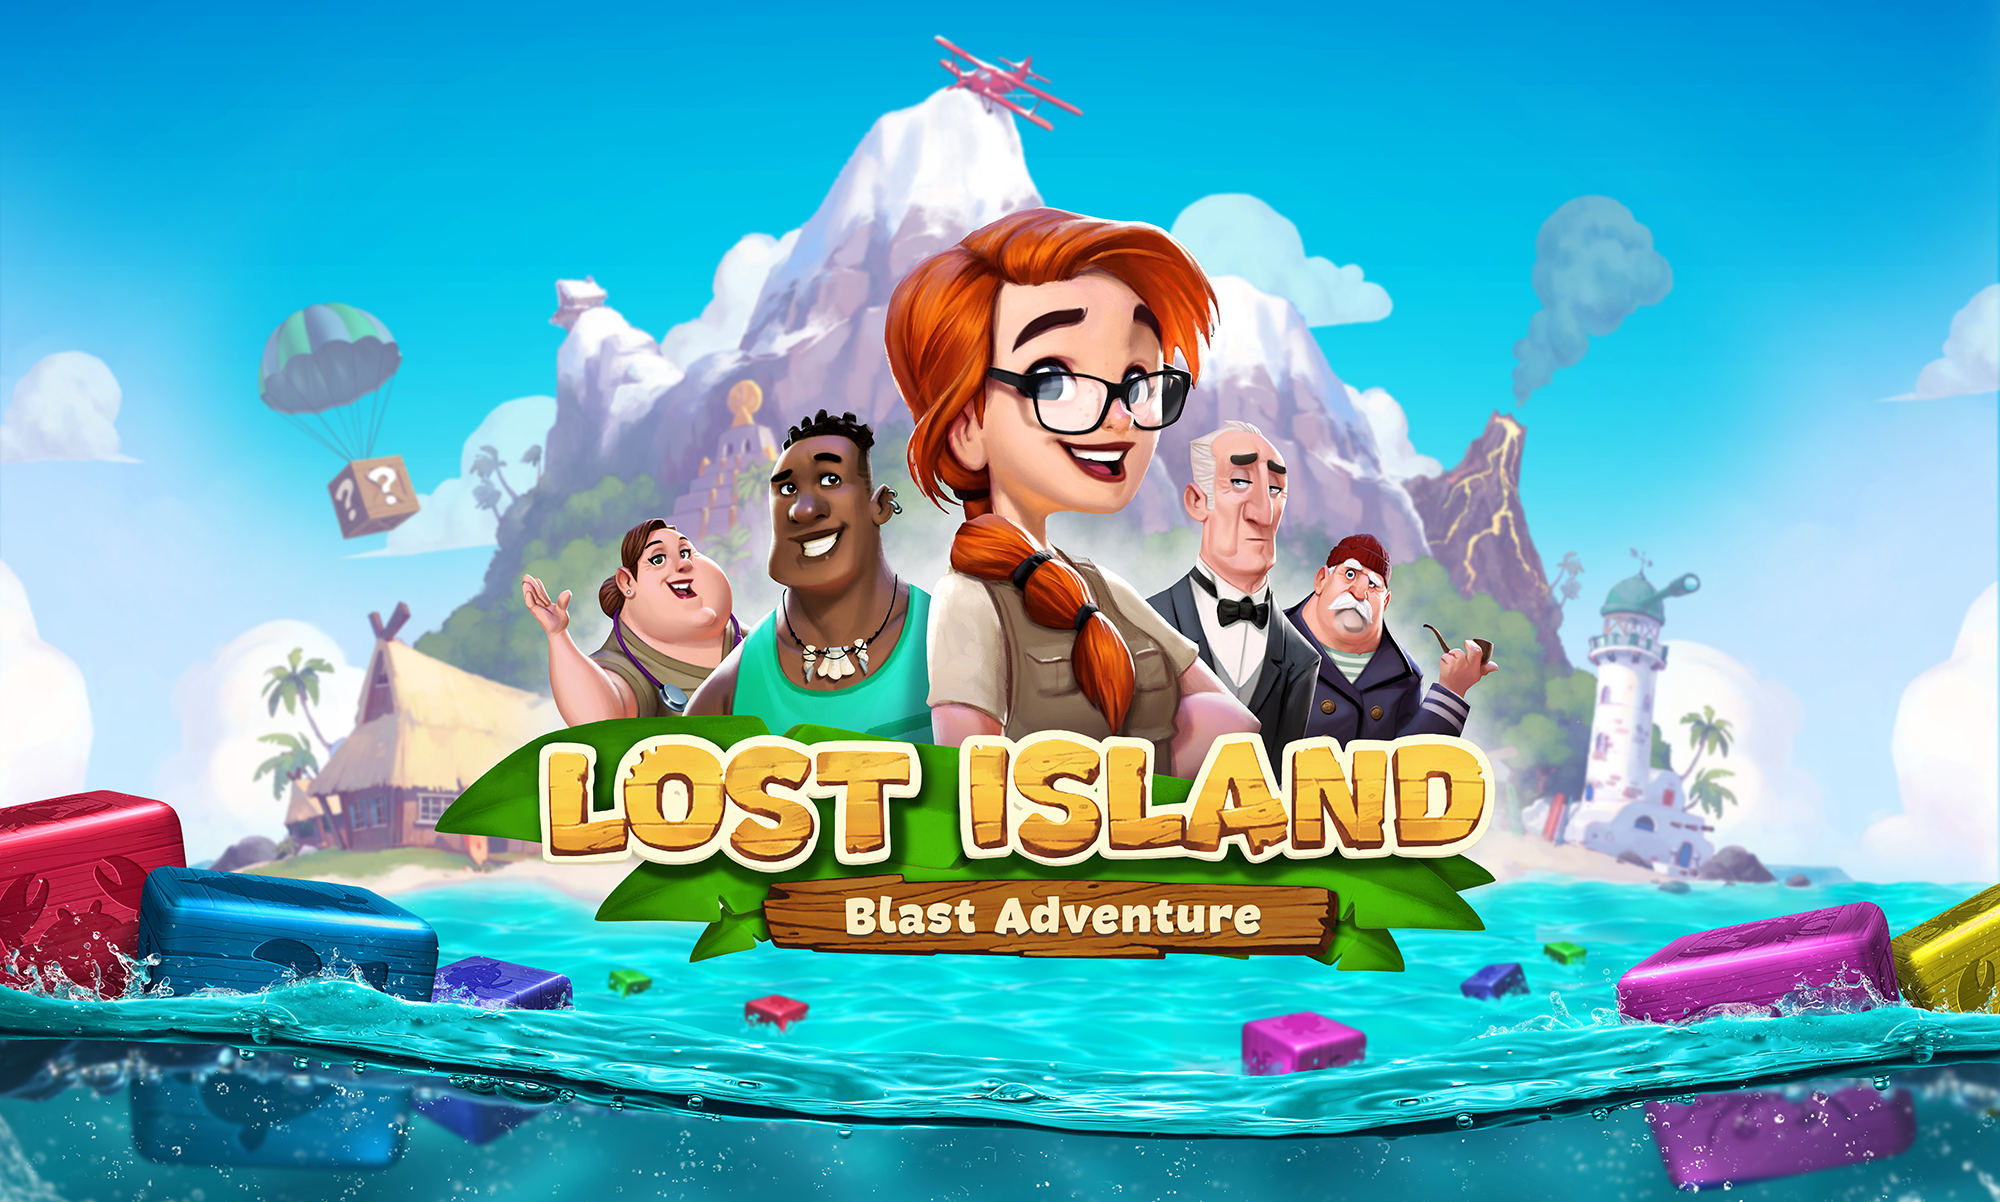 press-kit-lost-island-blast-adventure-2